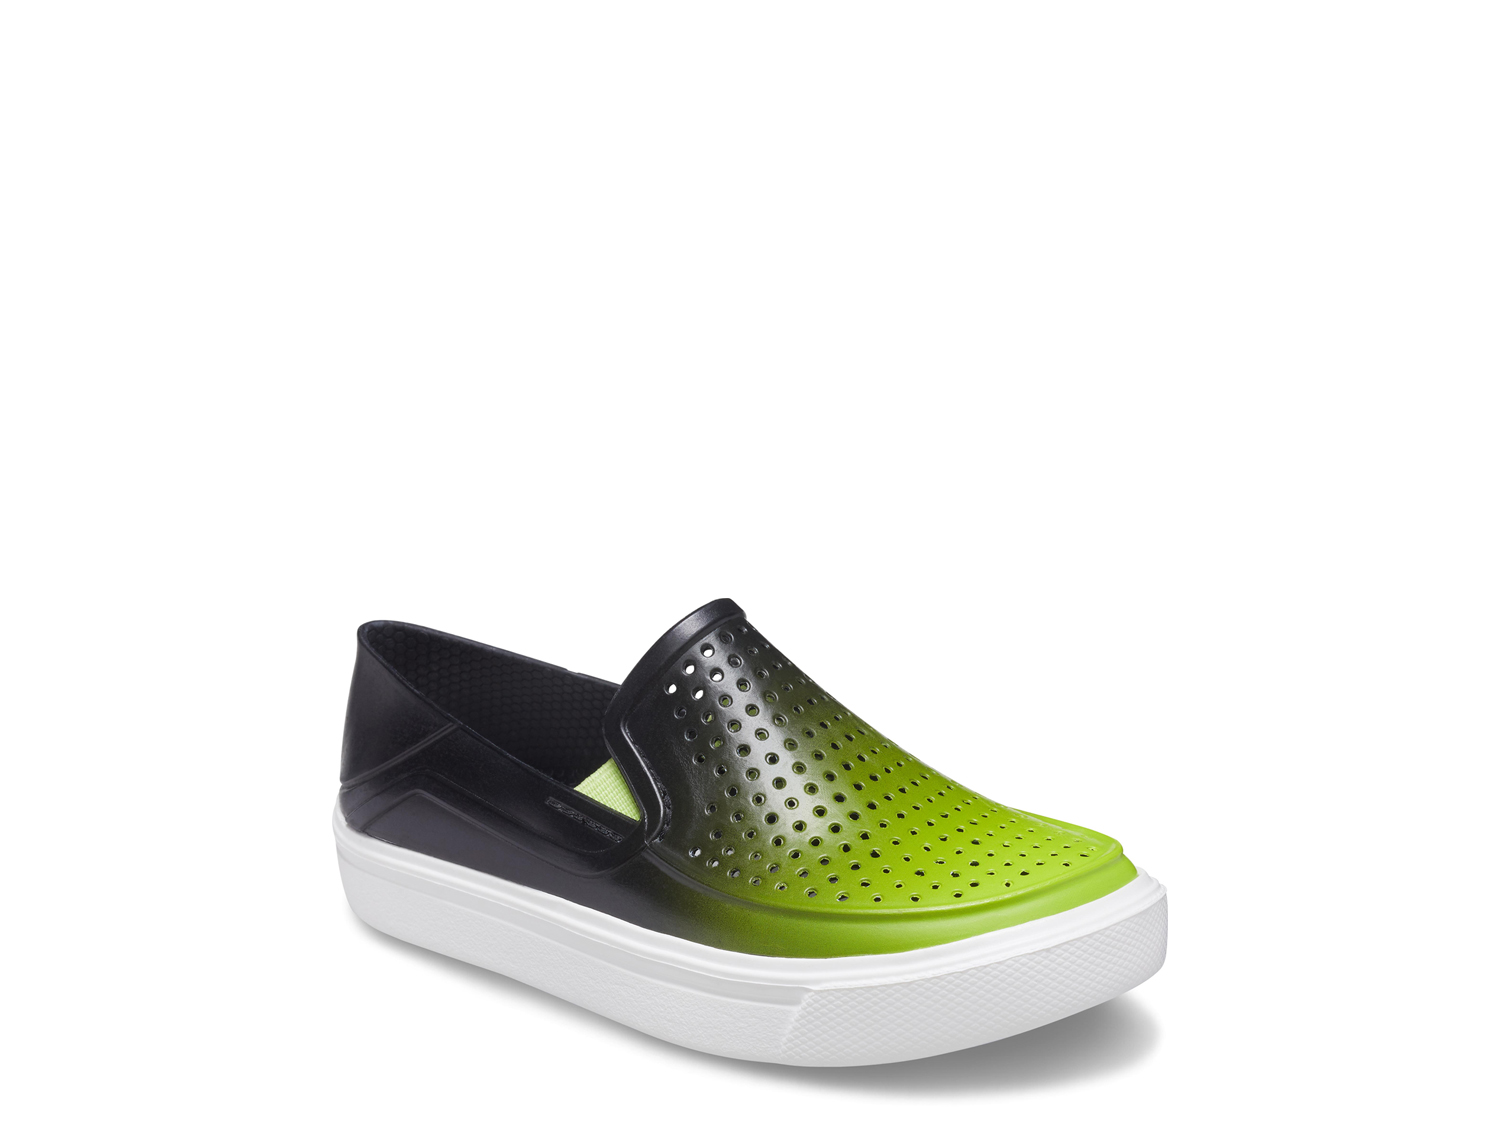 Crocs CitiLane Roka Slip-On Shoes Navy White Mens Size 13 Comfort Loafer 